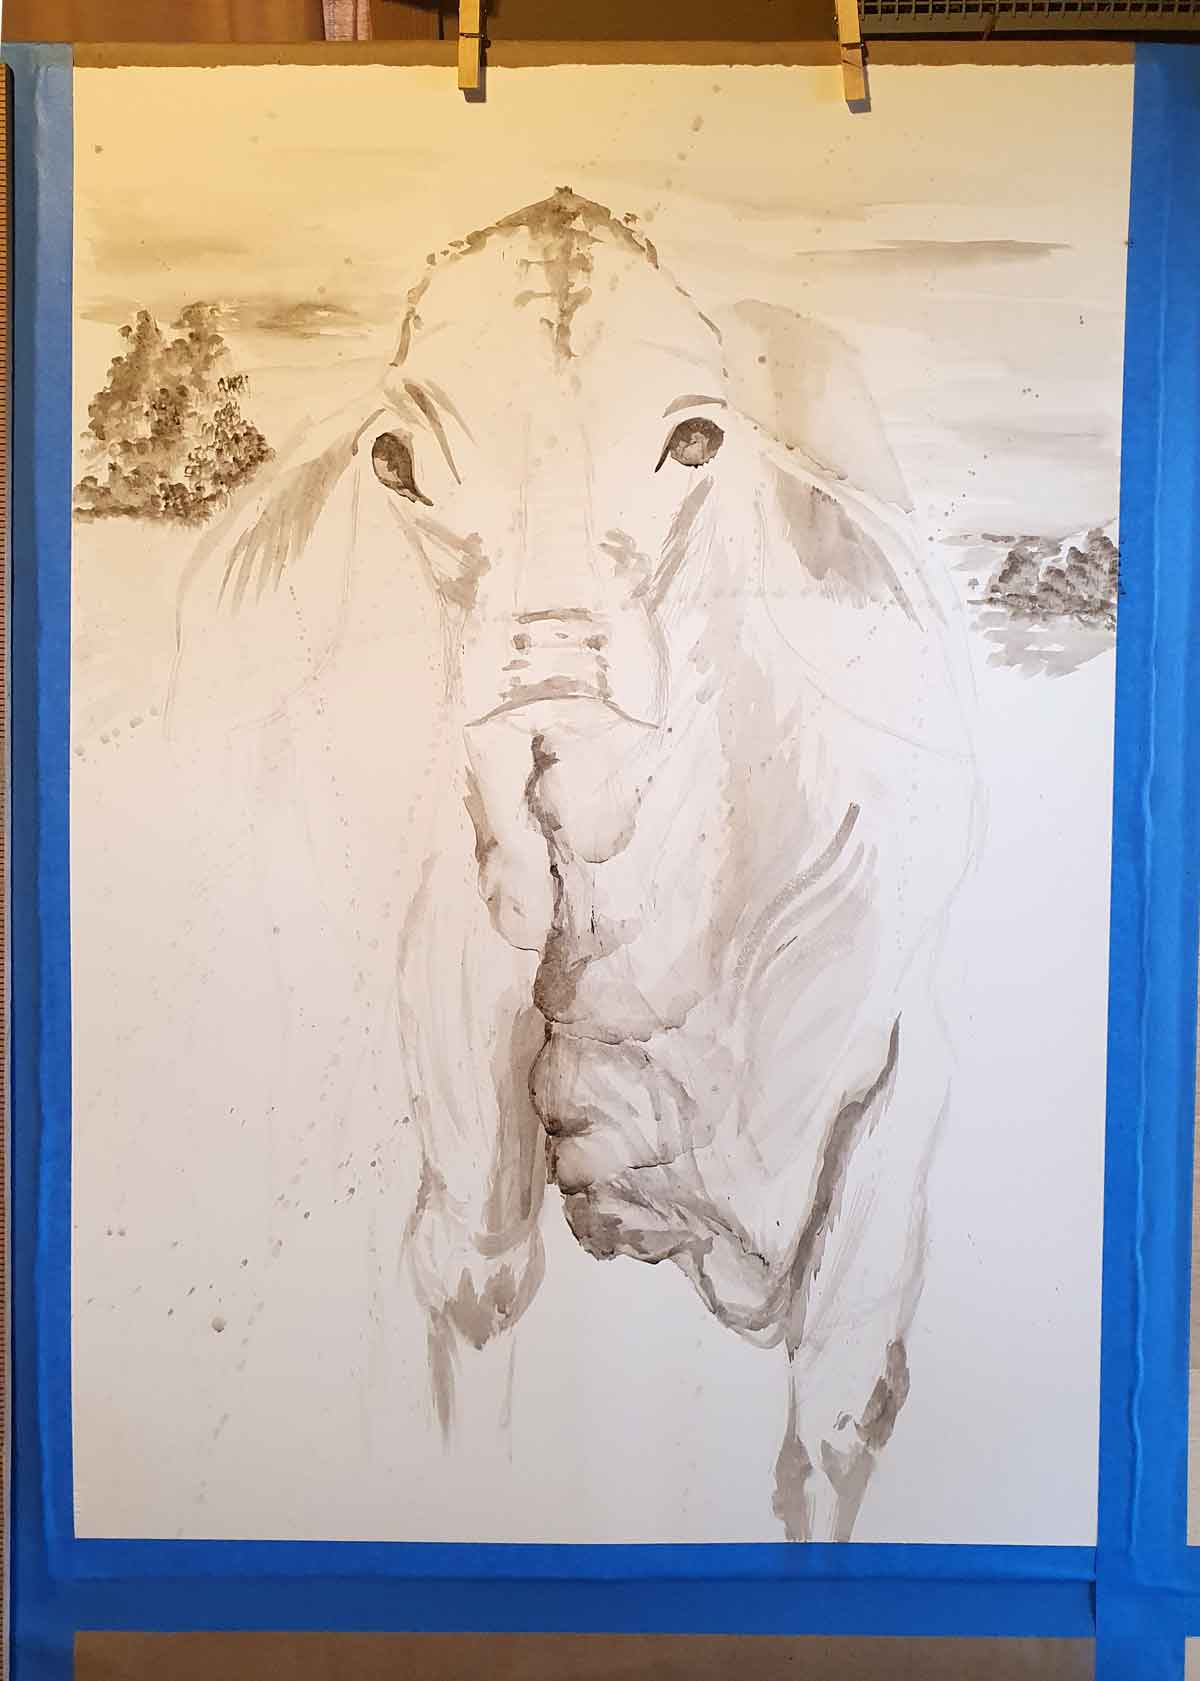 A cow portrait in progress, using bone pigments from Wild Ozark.